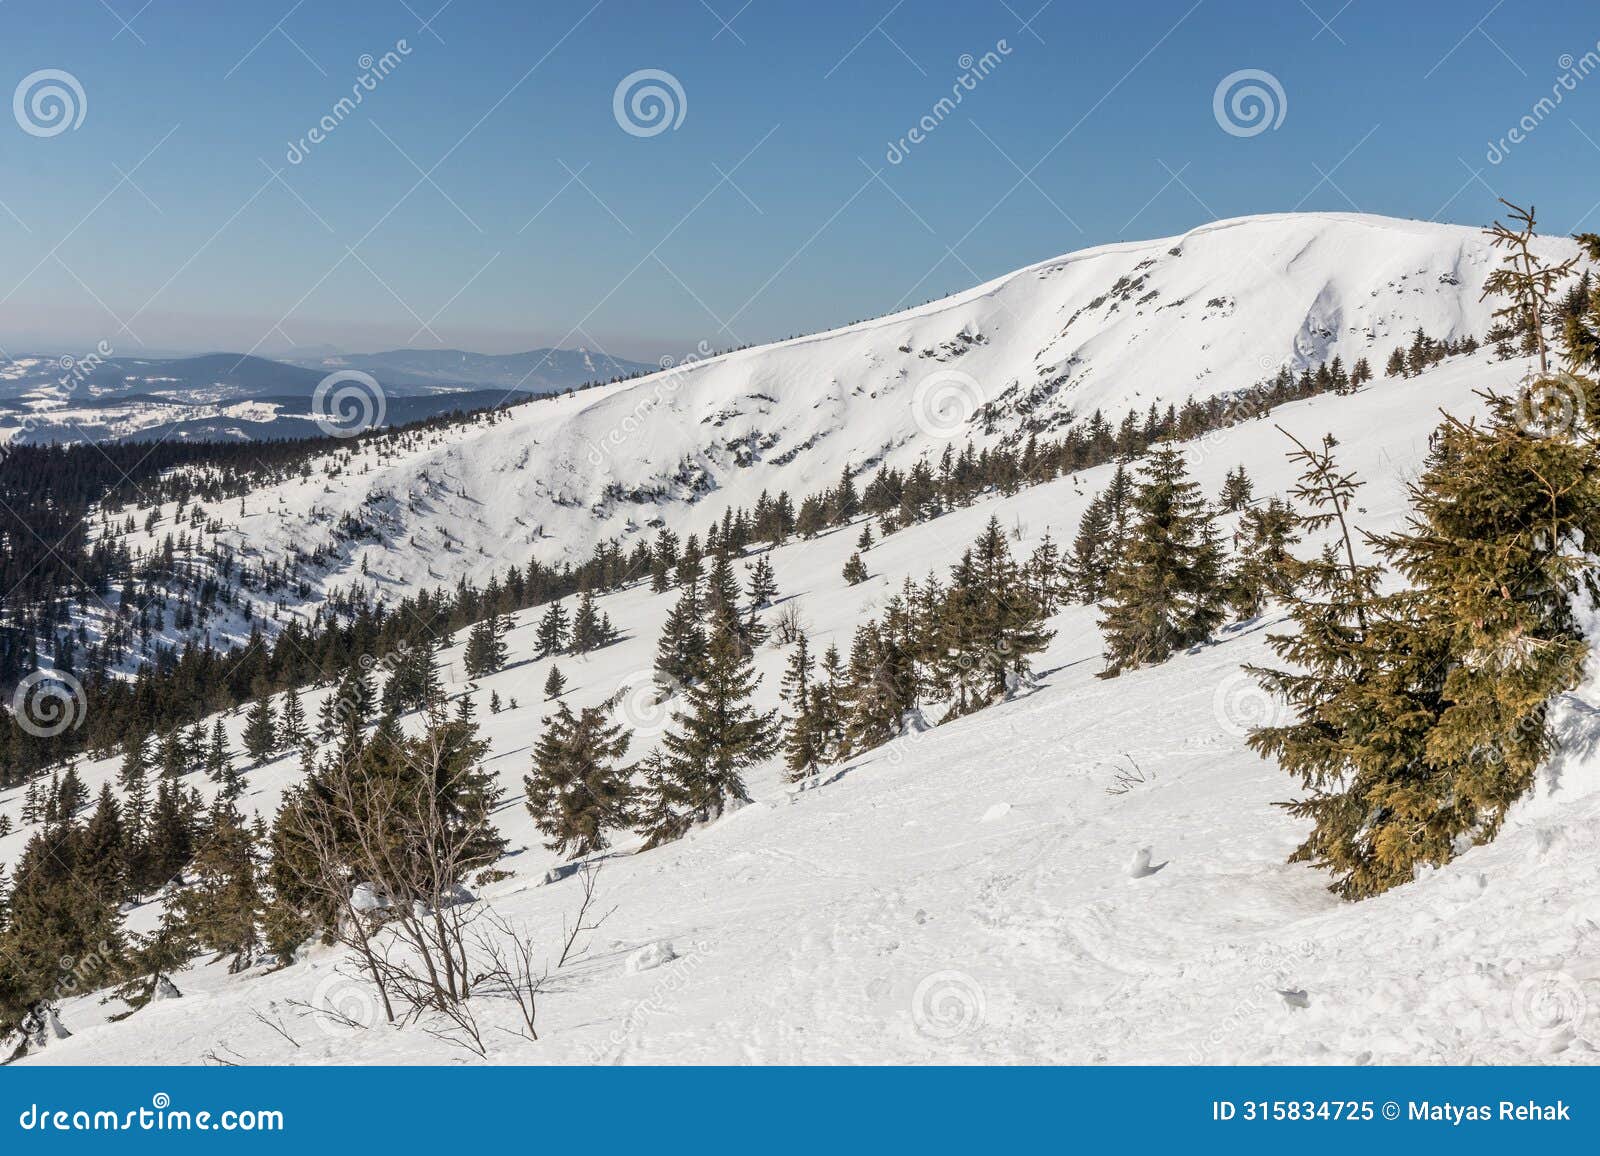 kotel mountain in krkonose (giant) mountains, czech republ